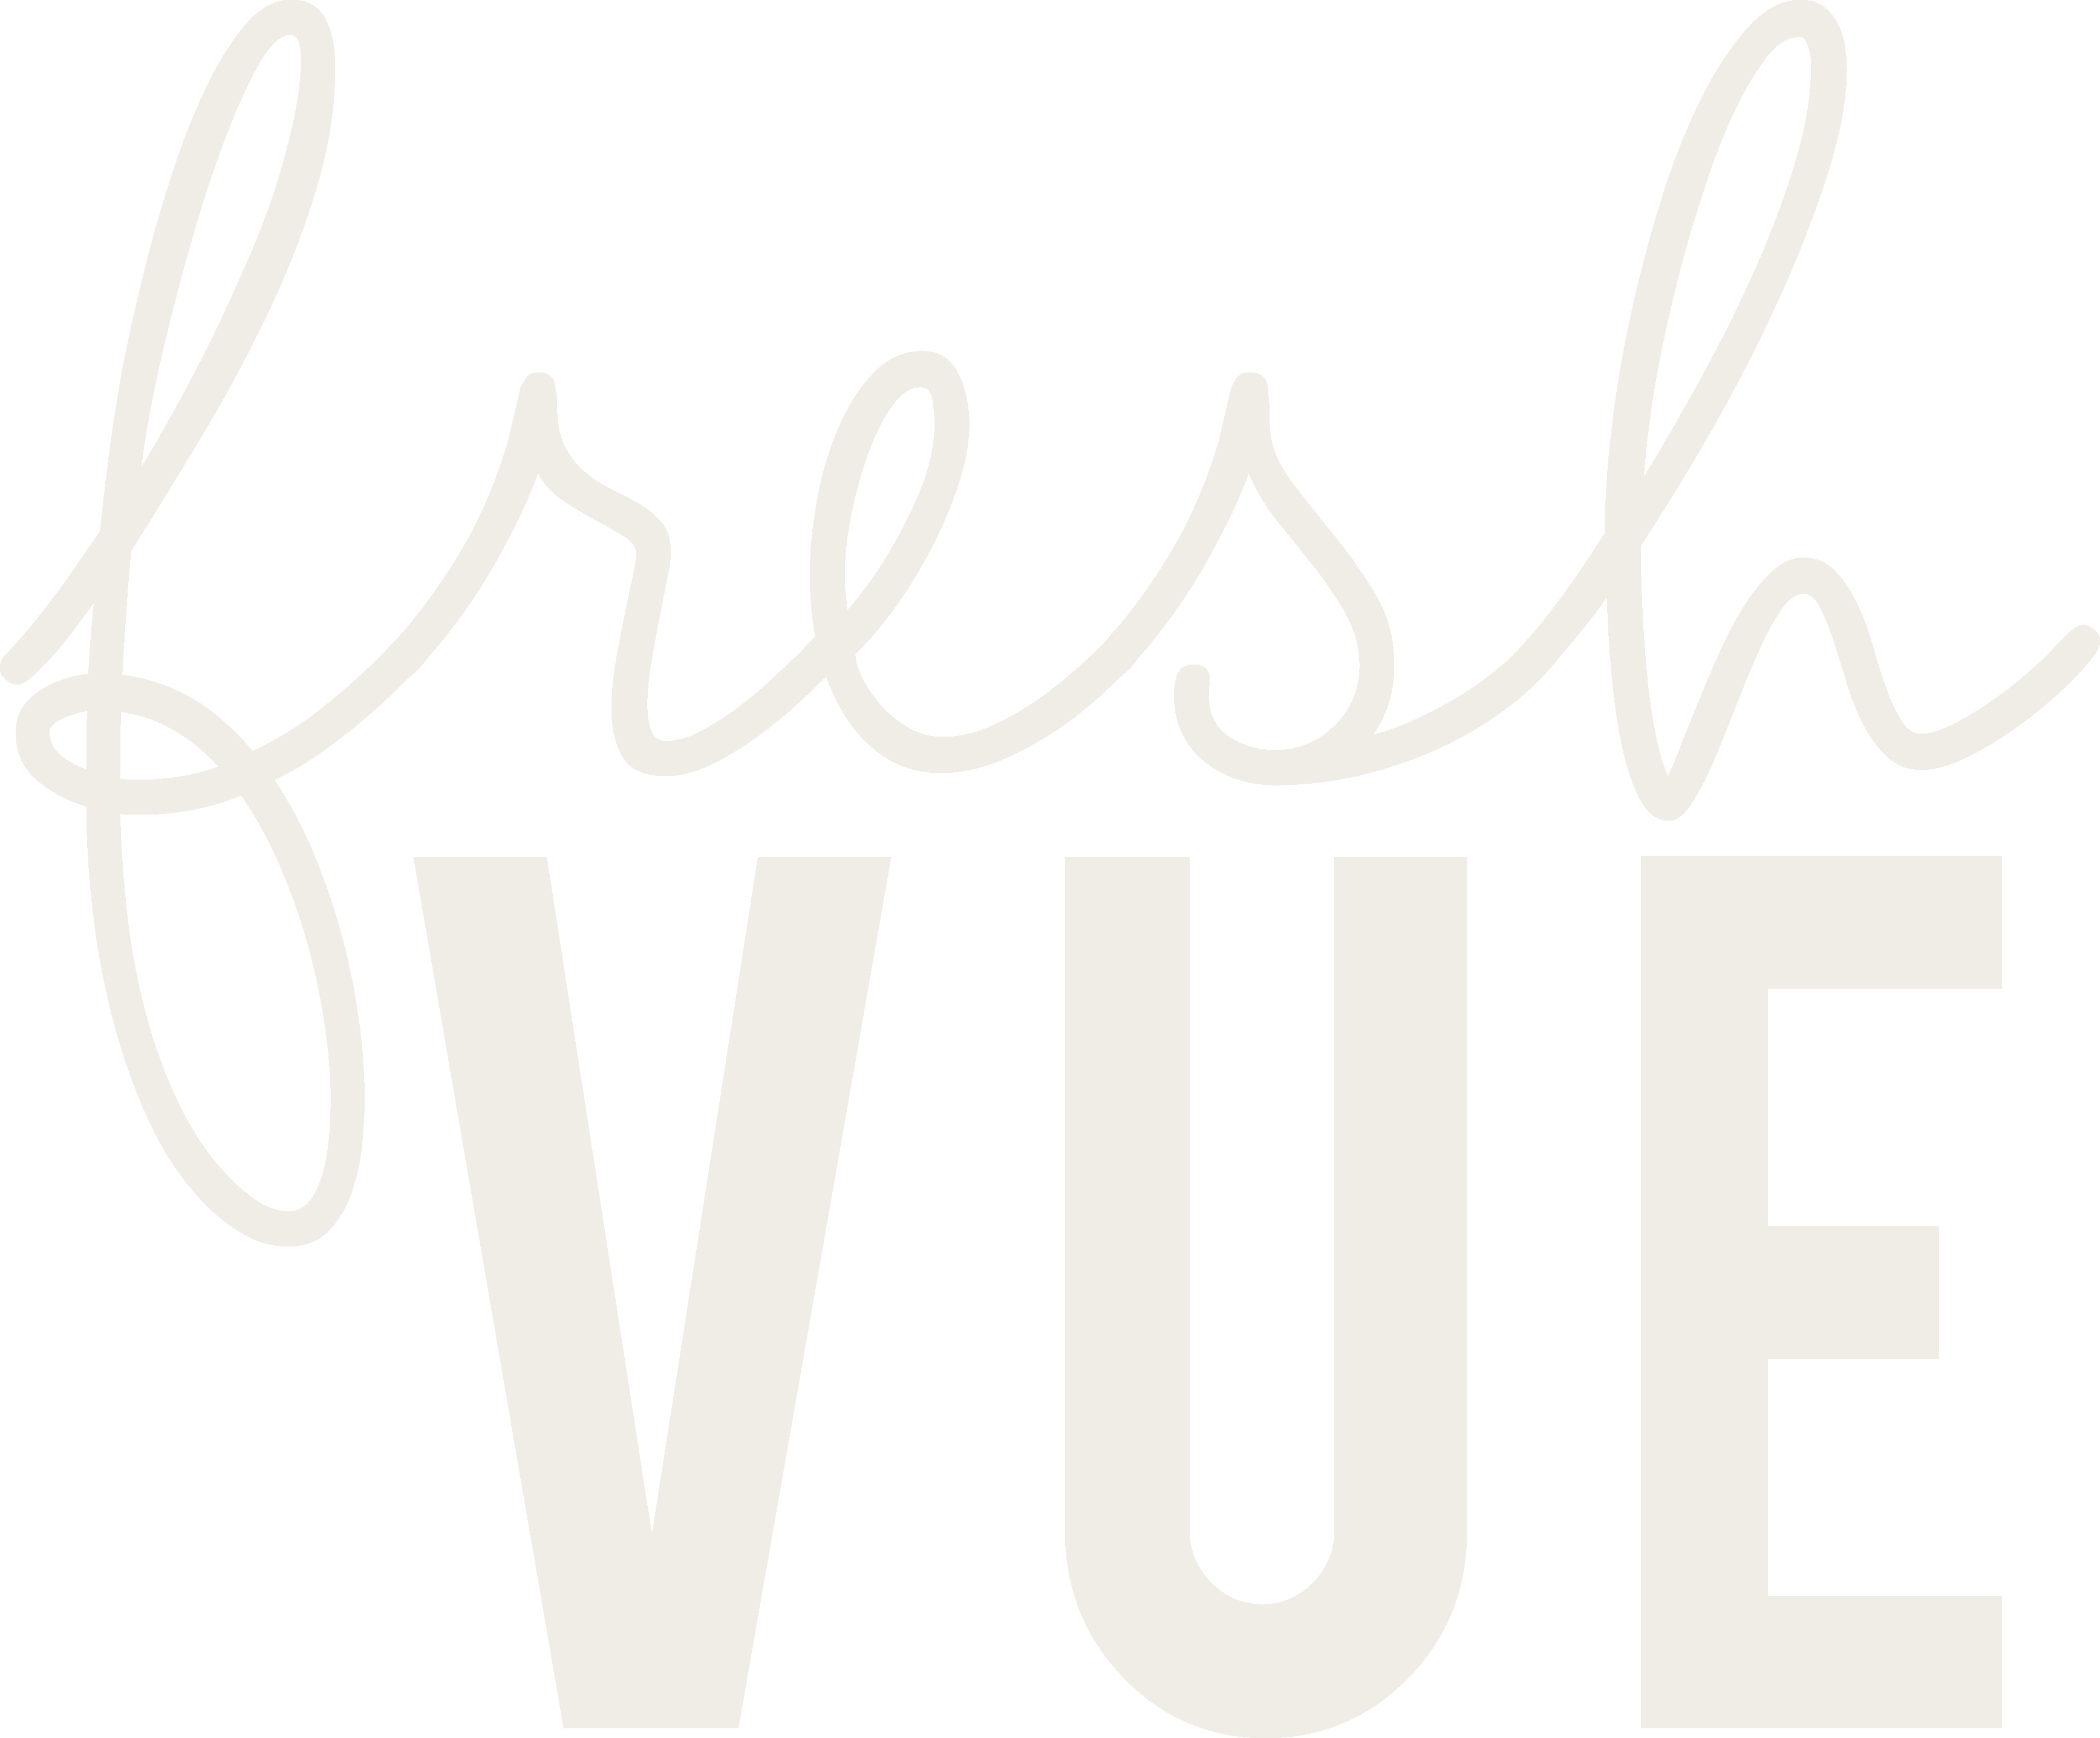 509 Logo - FreshVue - Strategic, Informed, Executive Consultants |